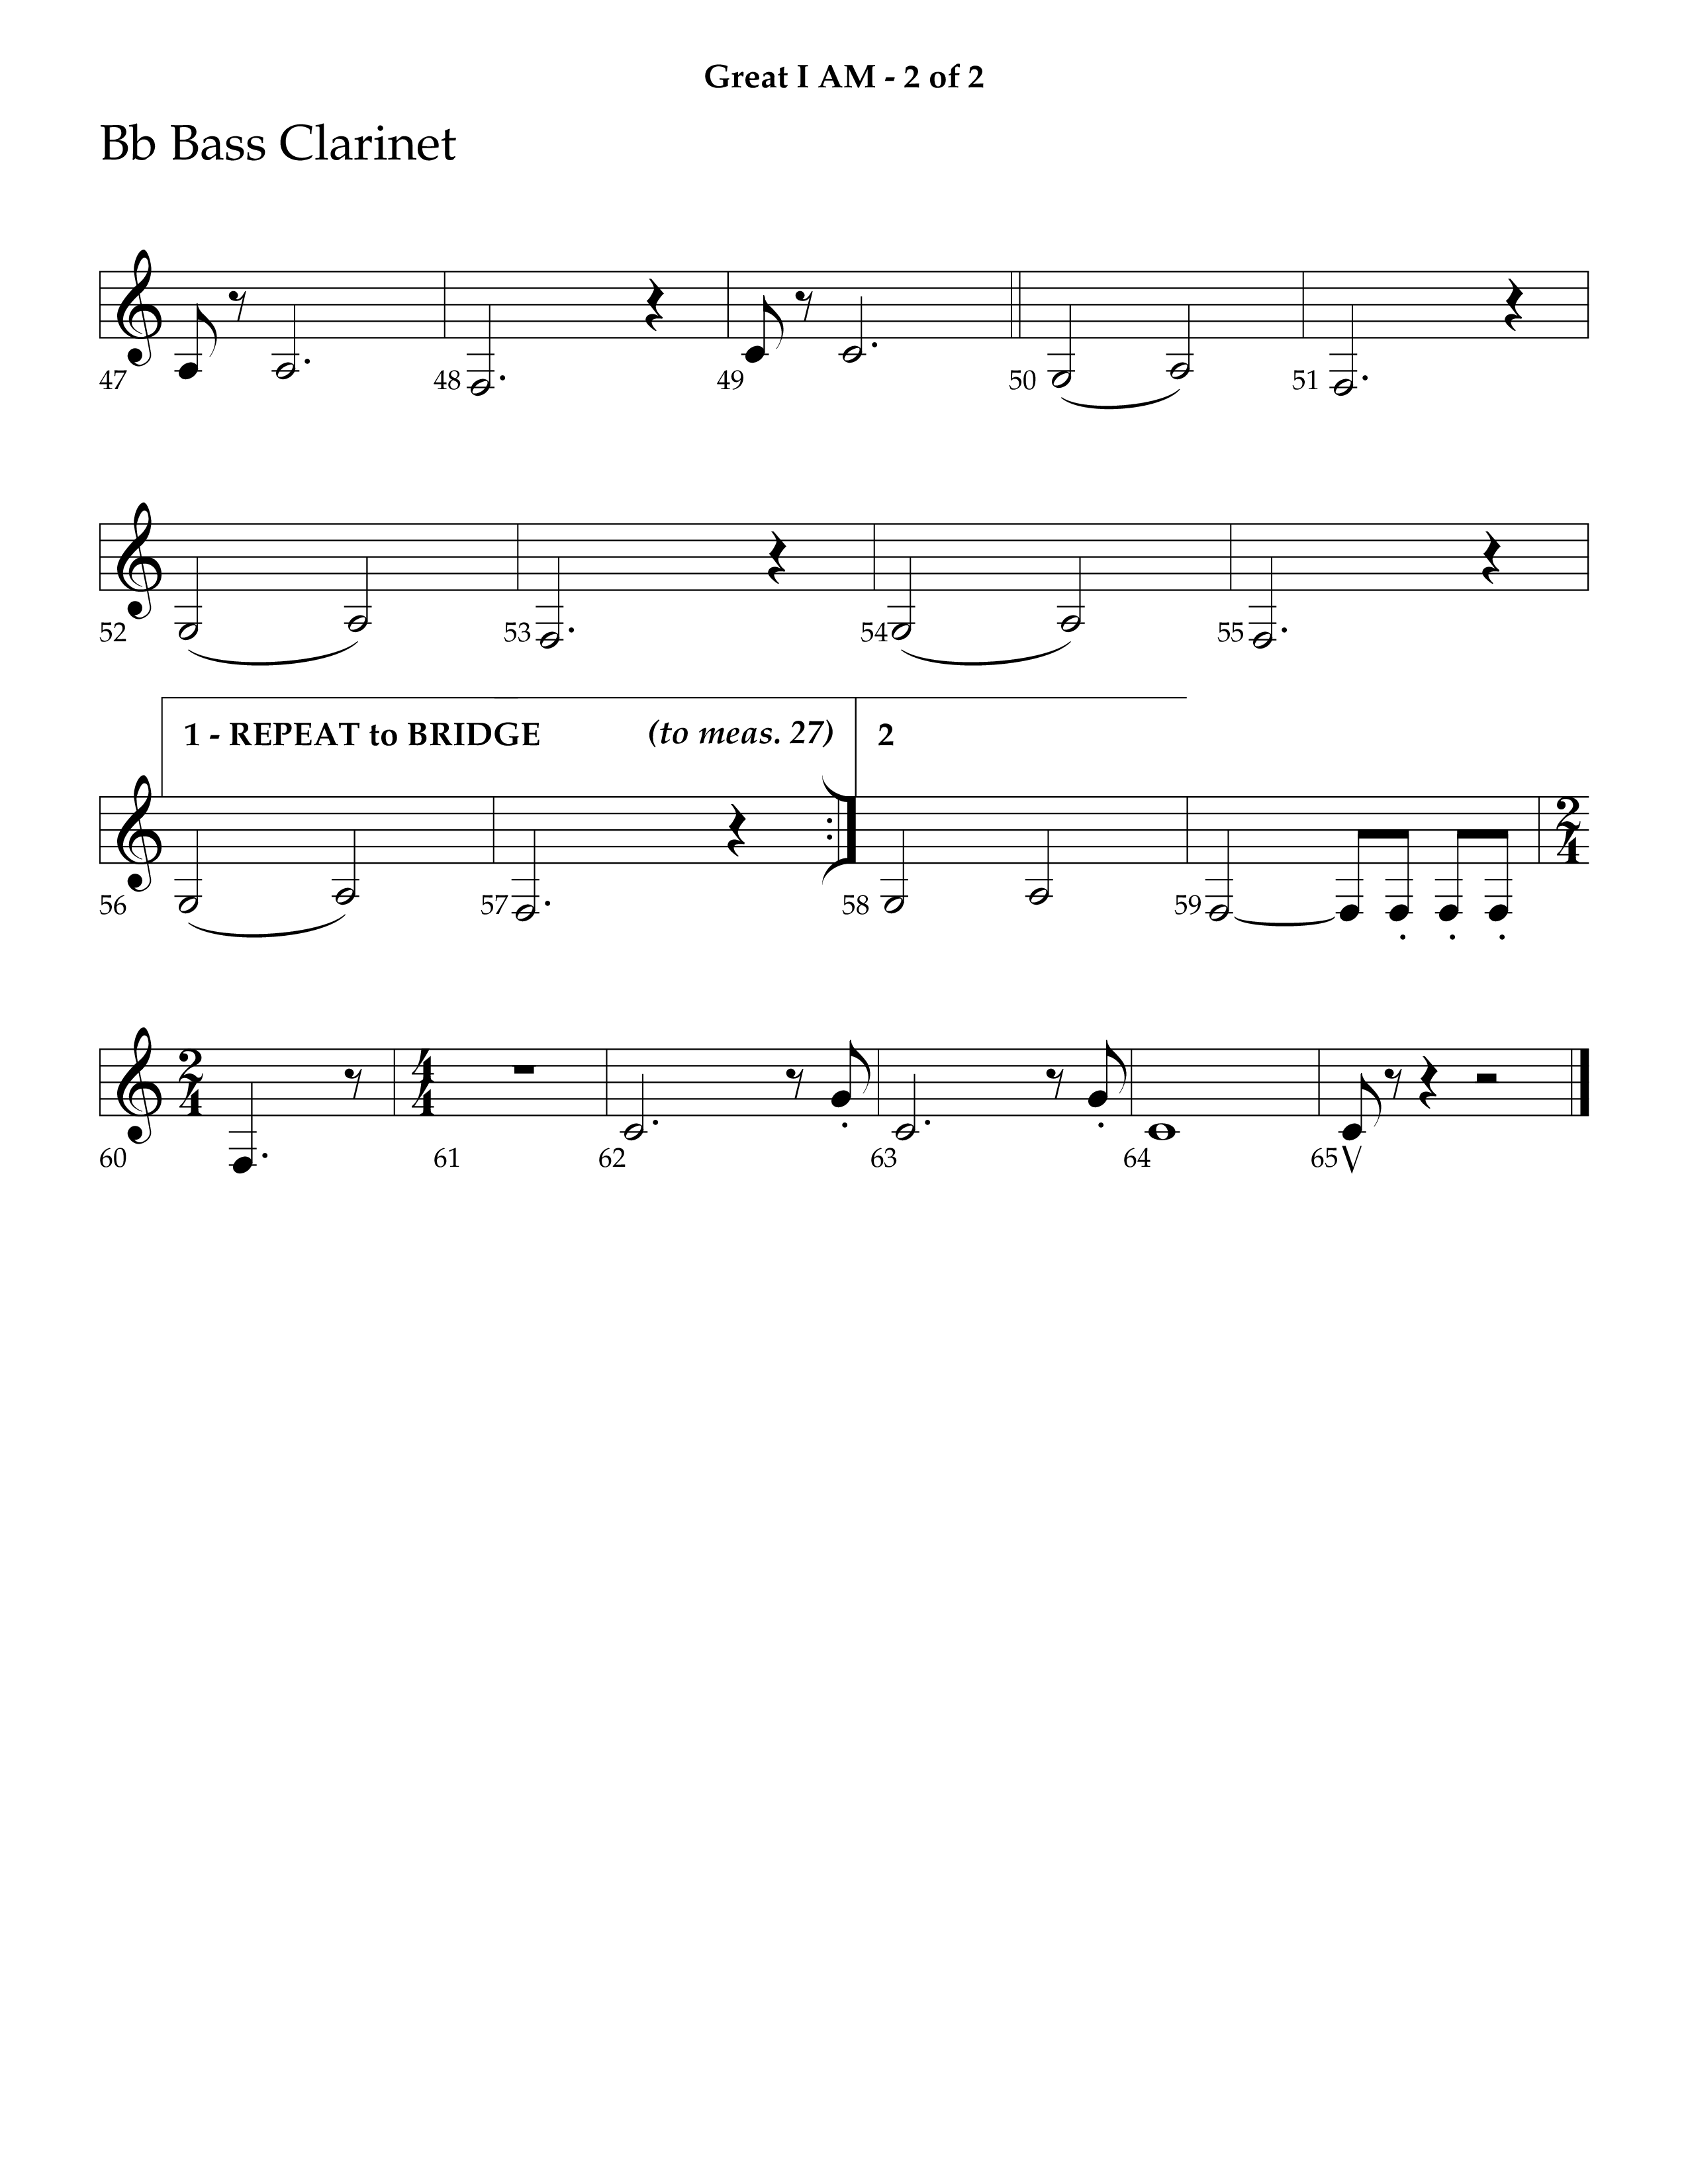 Great I Am (Choral Anthem SATB) Bass Clarinet (Lifeway Choral / Arr. Ken Barker / Orch. Dave Williamson)